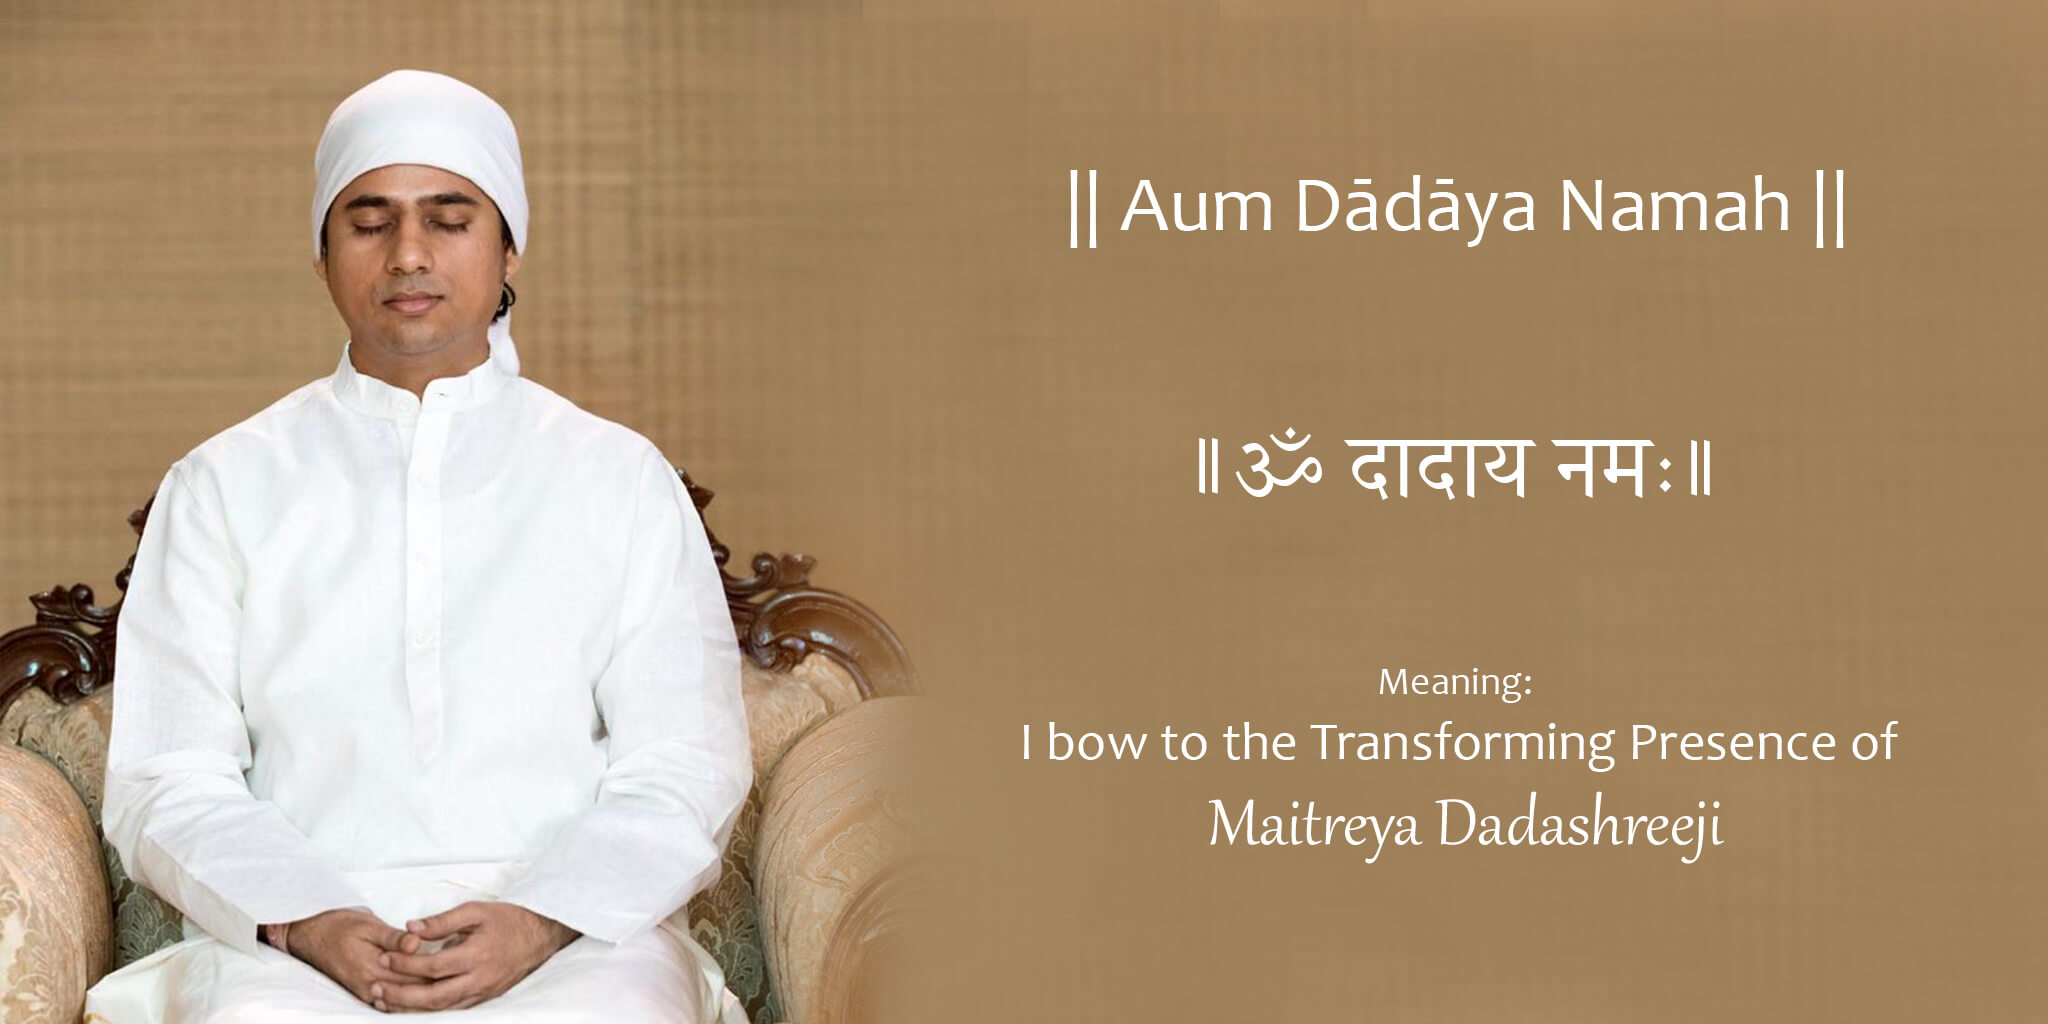 Dadashreeji Mantra for Purification